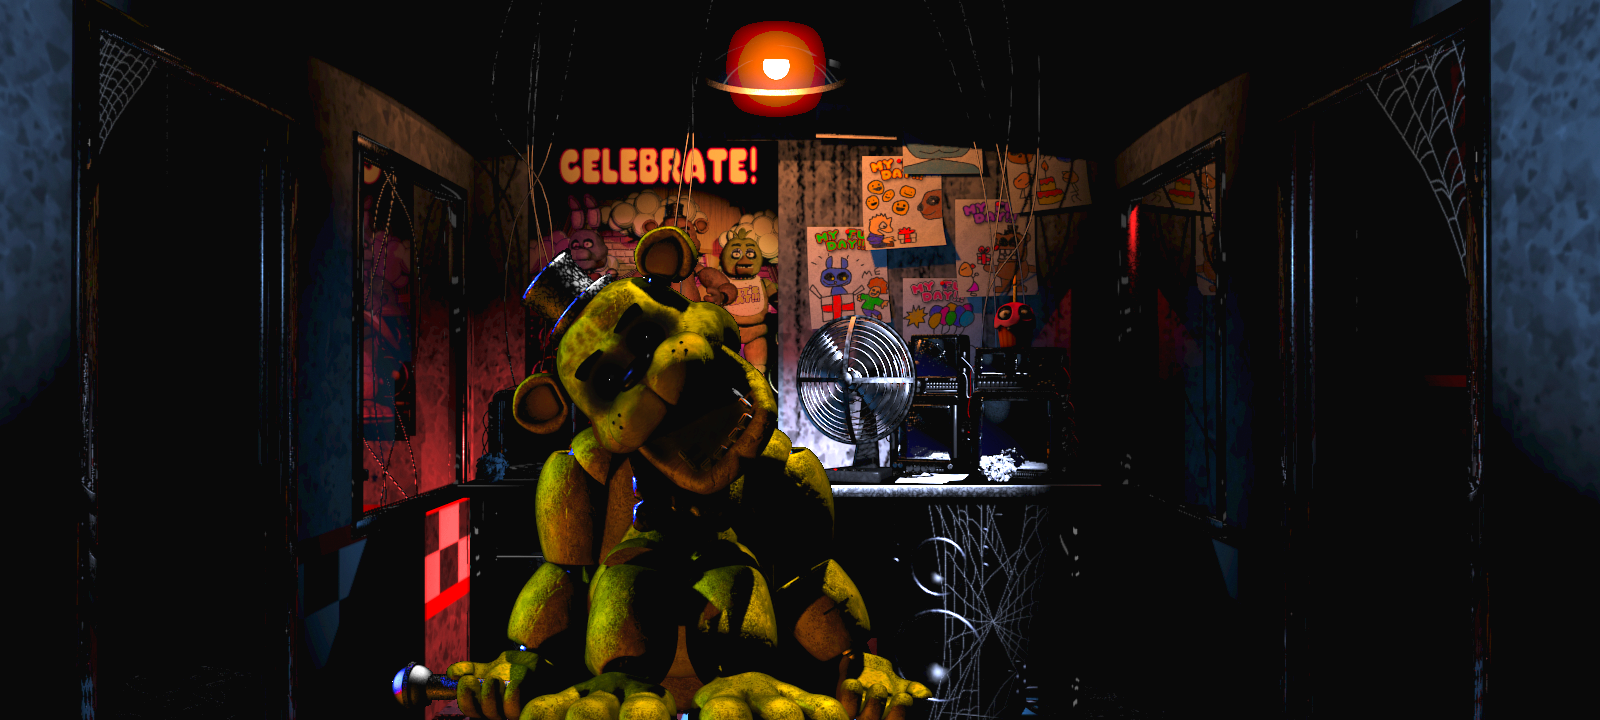 17 easter eggs e referências de Five Nights at Freddy's - NerdBunker